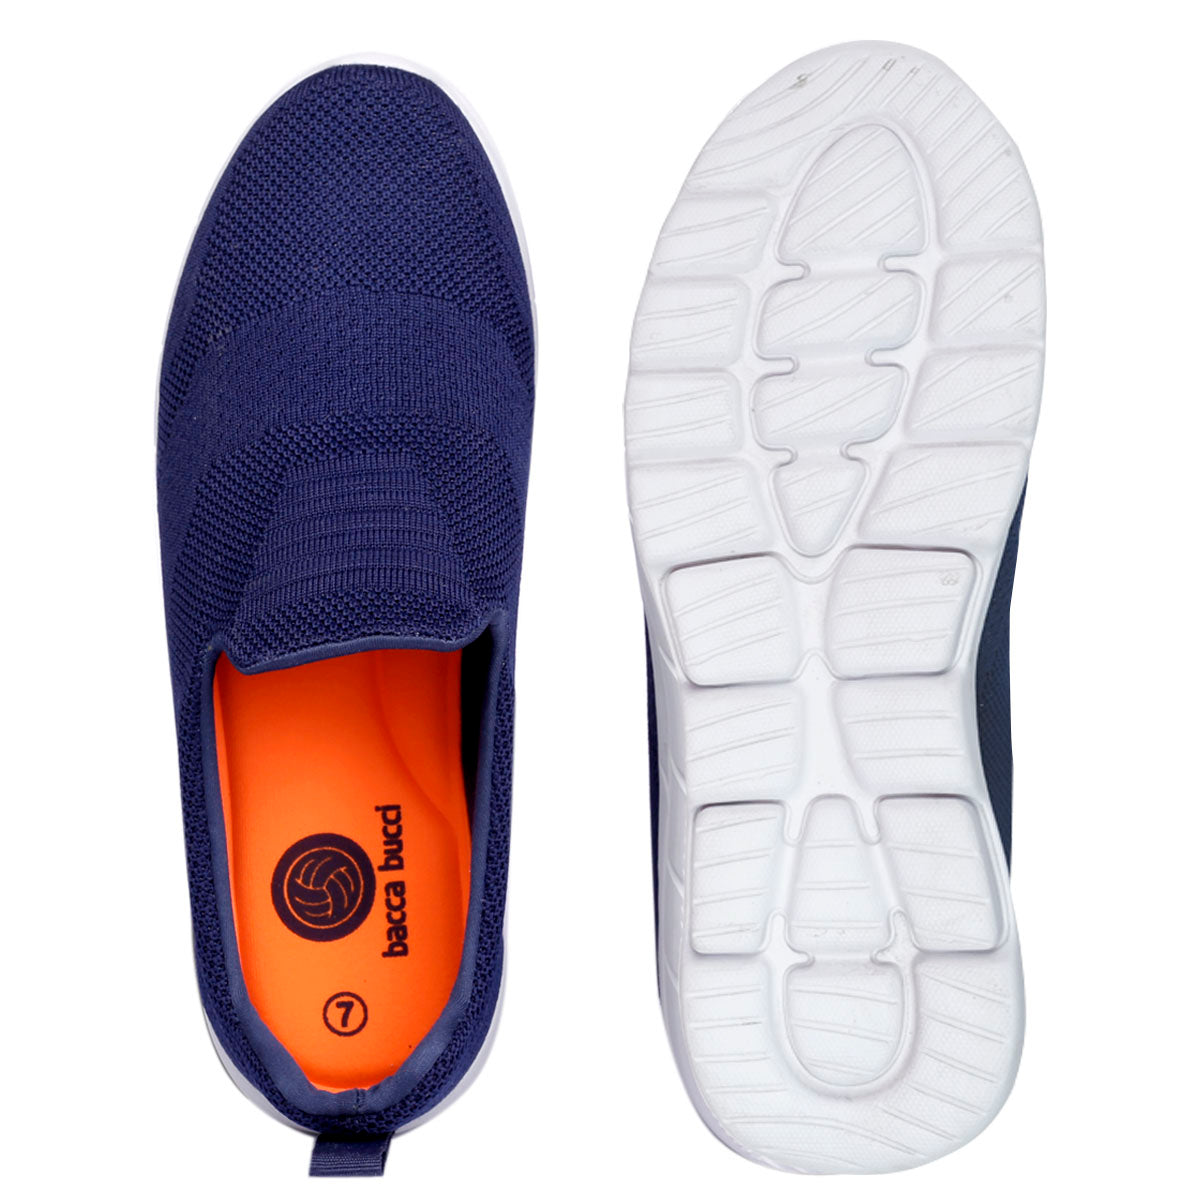 Bacca Bucci Walking Shoes for Men | Slip-on Shoes for Men